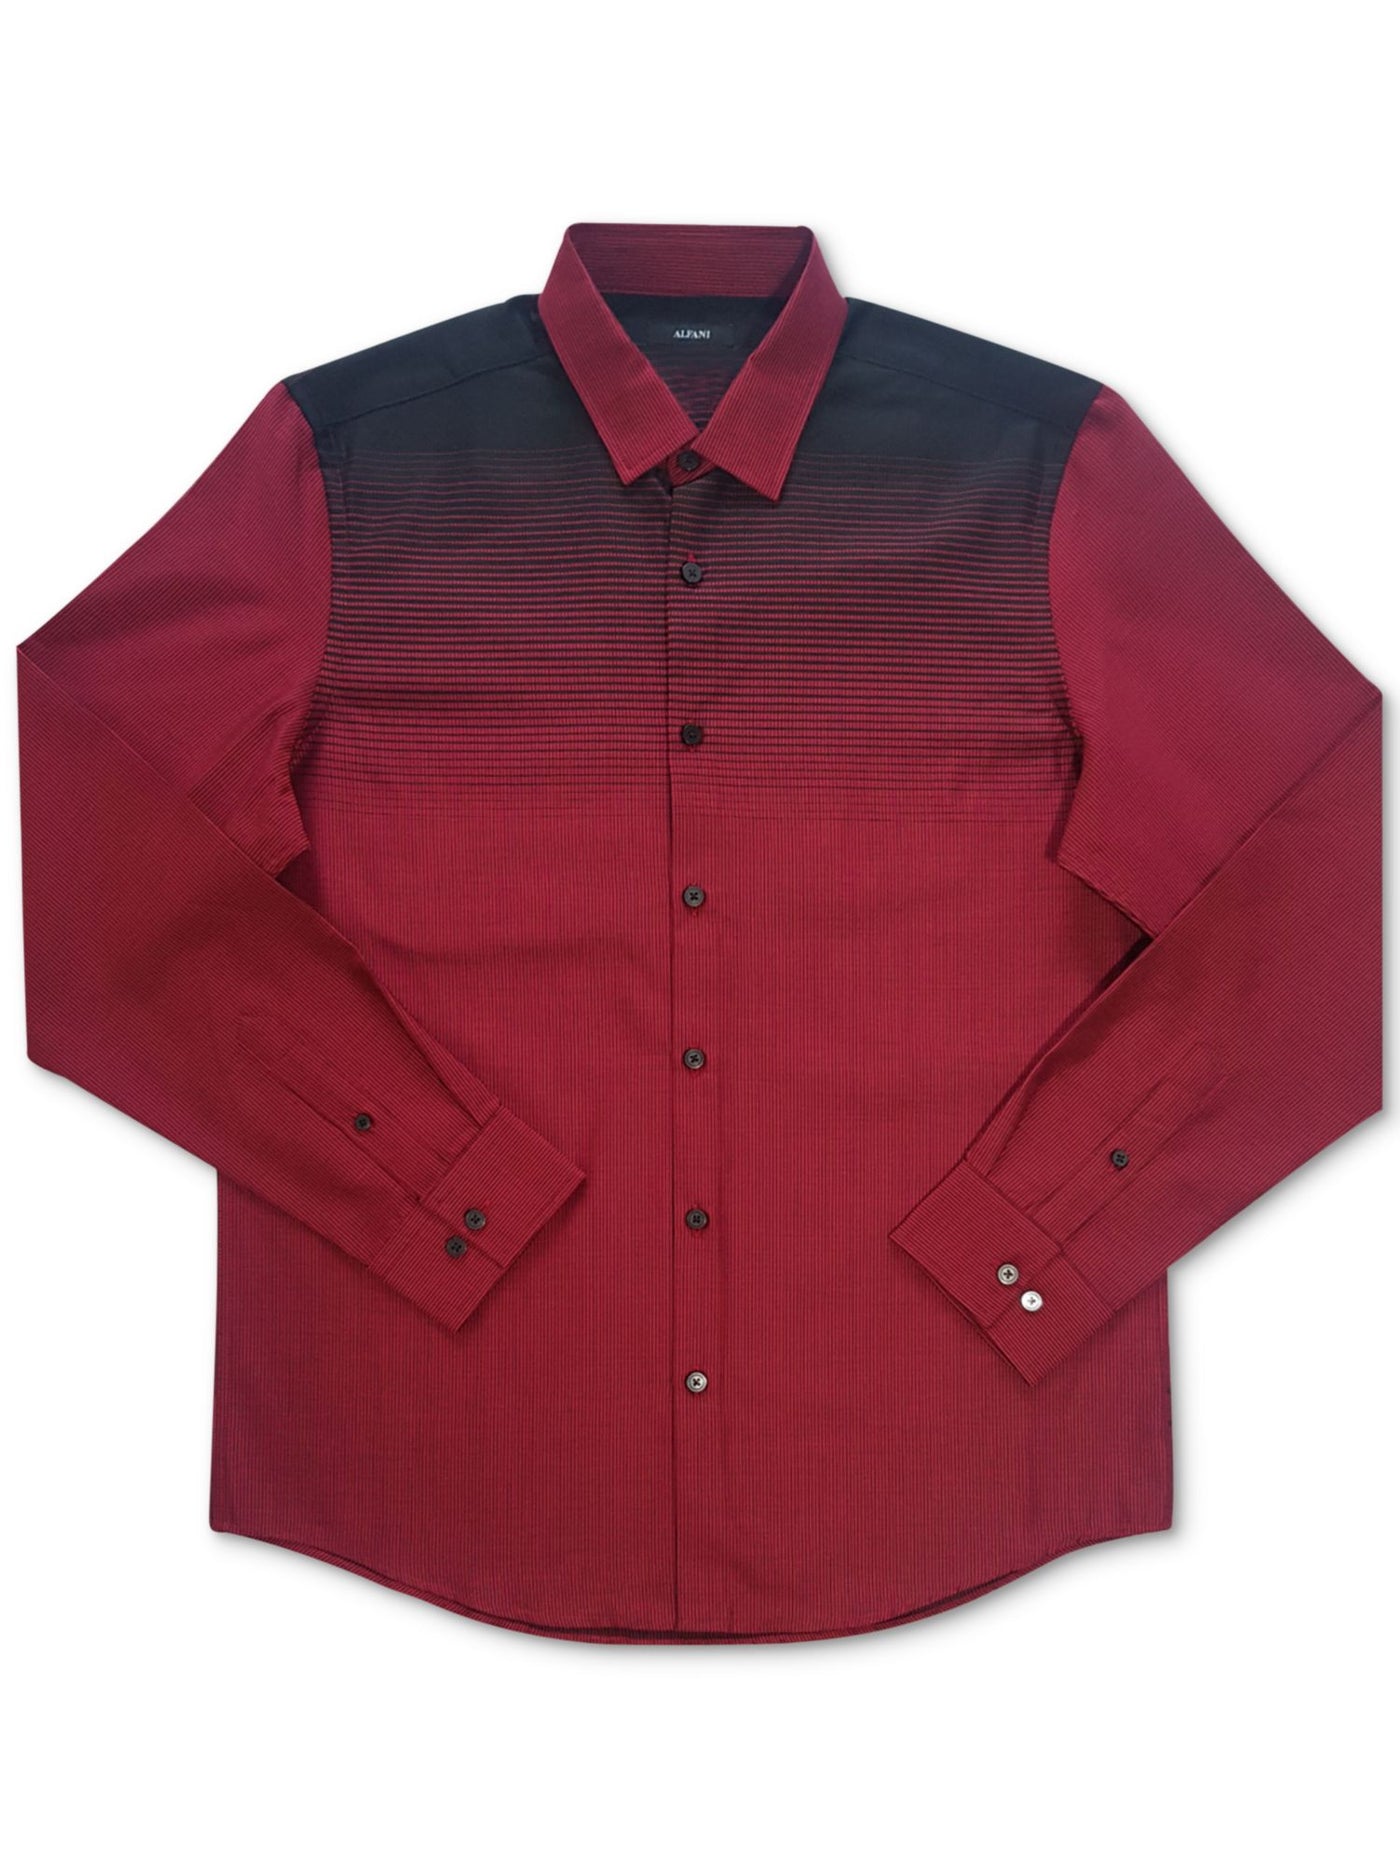 ALFANI Mens Red Printed Point Collar Classic Fit Button Down Cotton Blend Cotton Blend Shirt XL